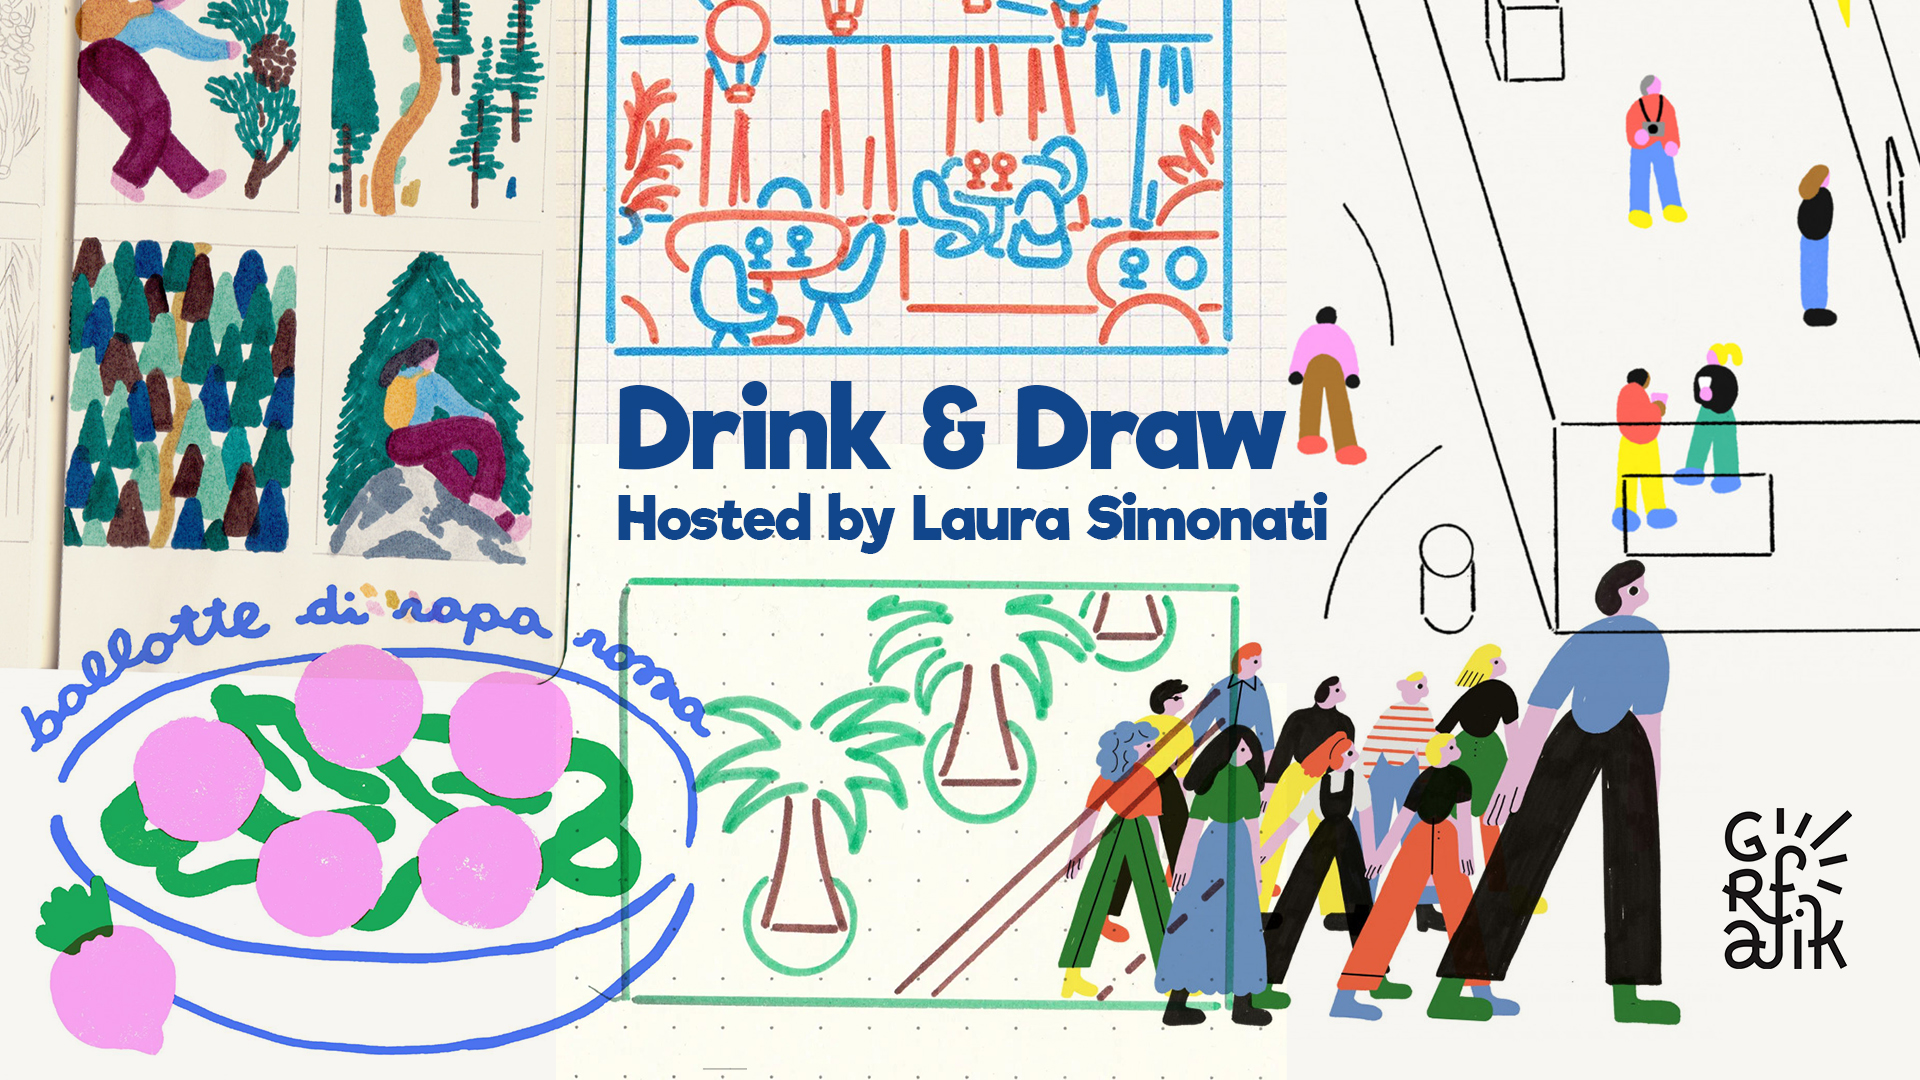 Drink & draw avec Laura Simonati